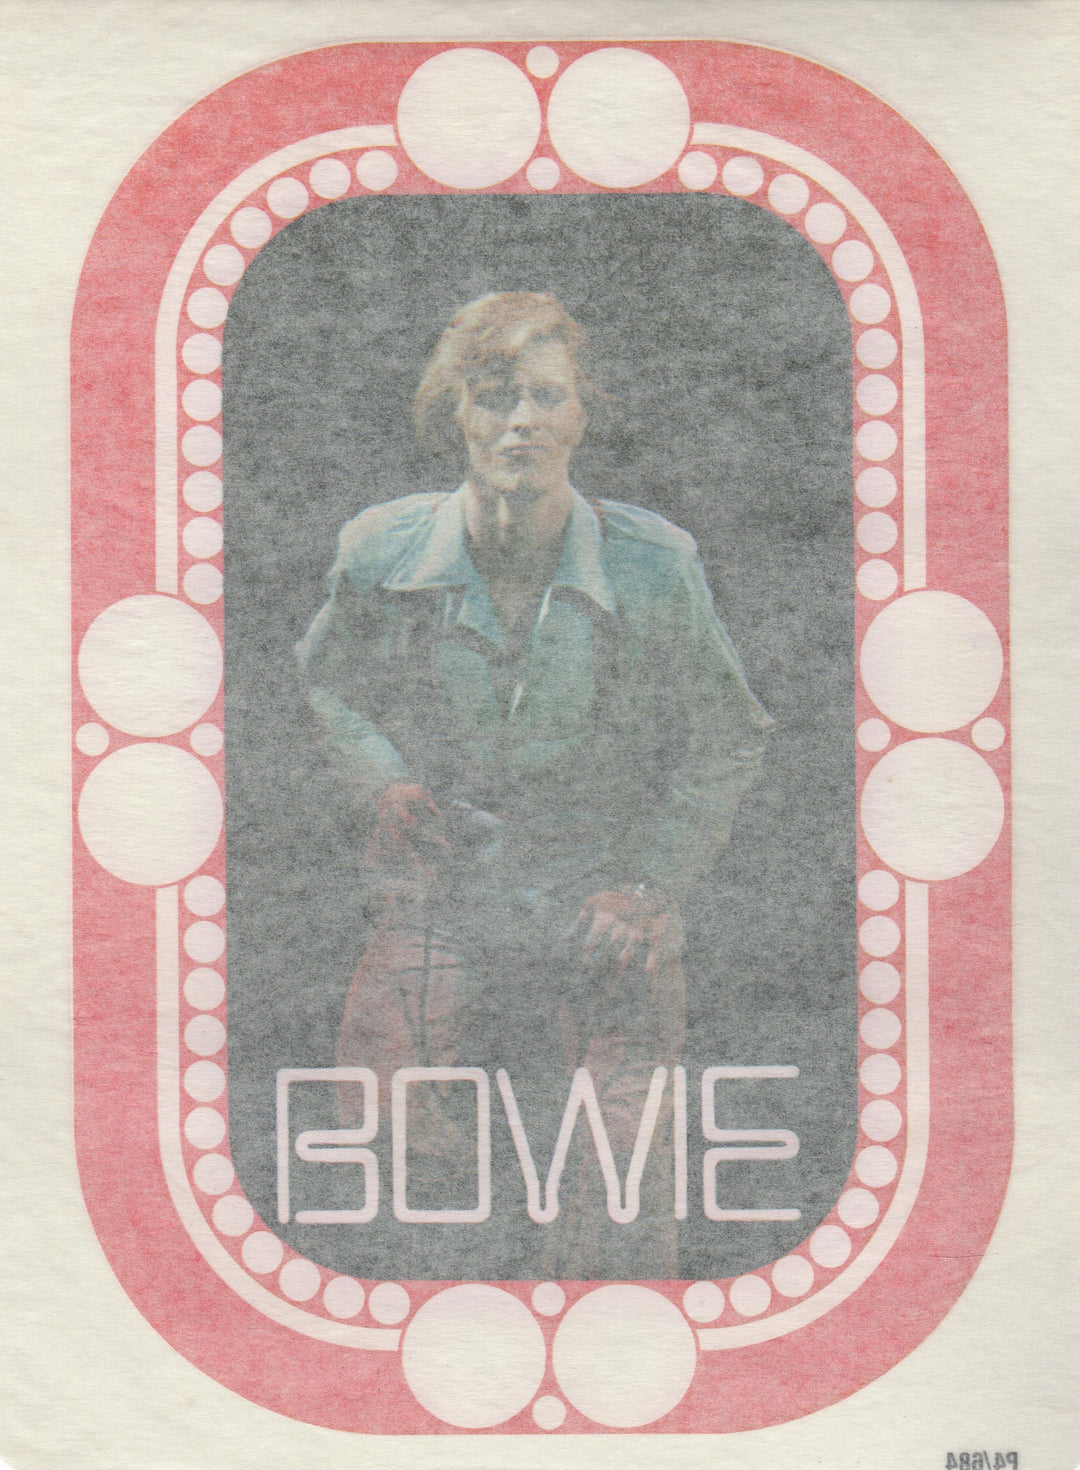 David Bowie Rock Music Legend Vintage 1970s Heat Transfer Iron On Graphic